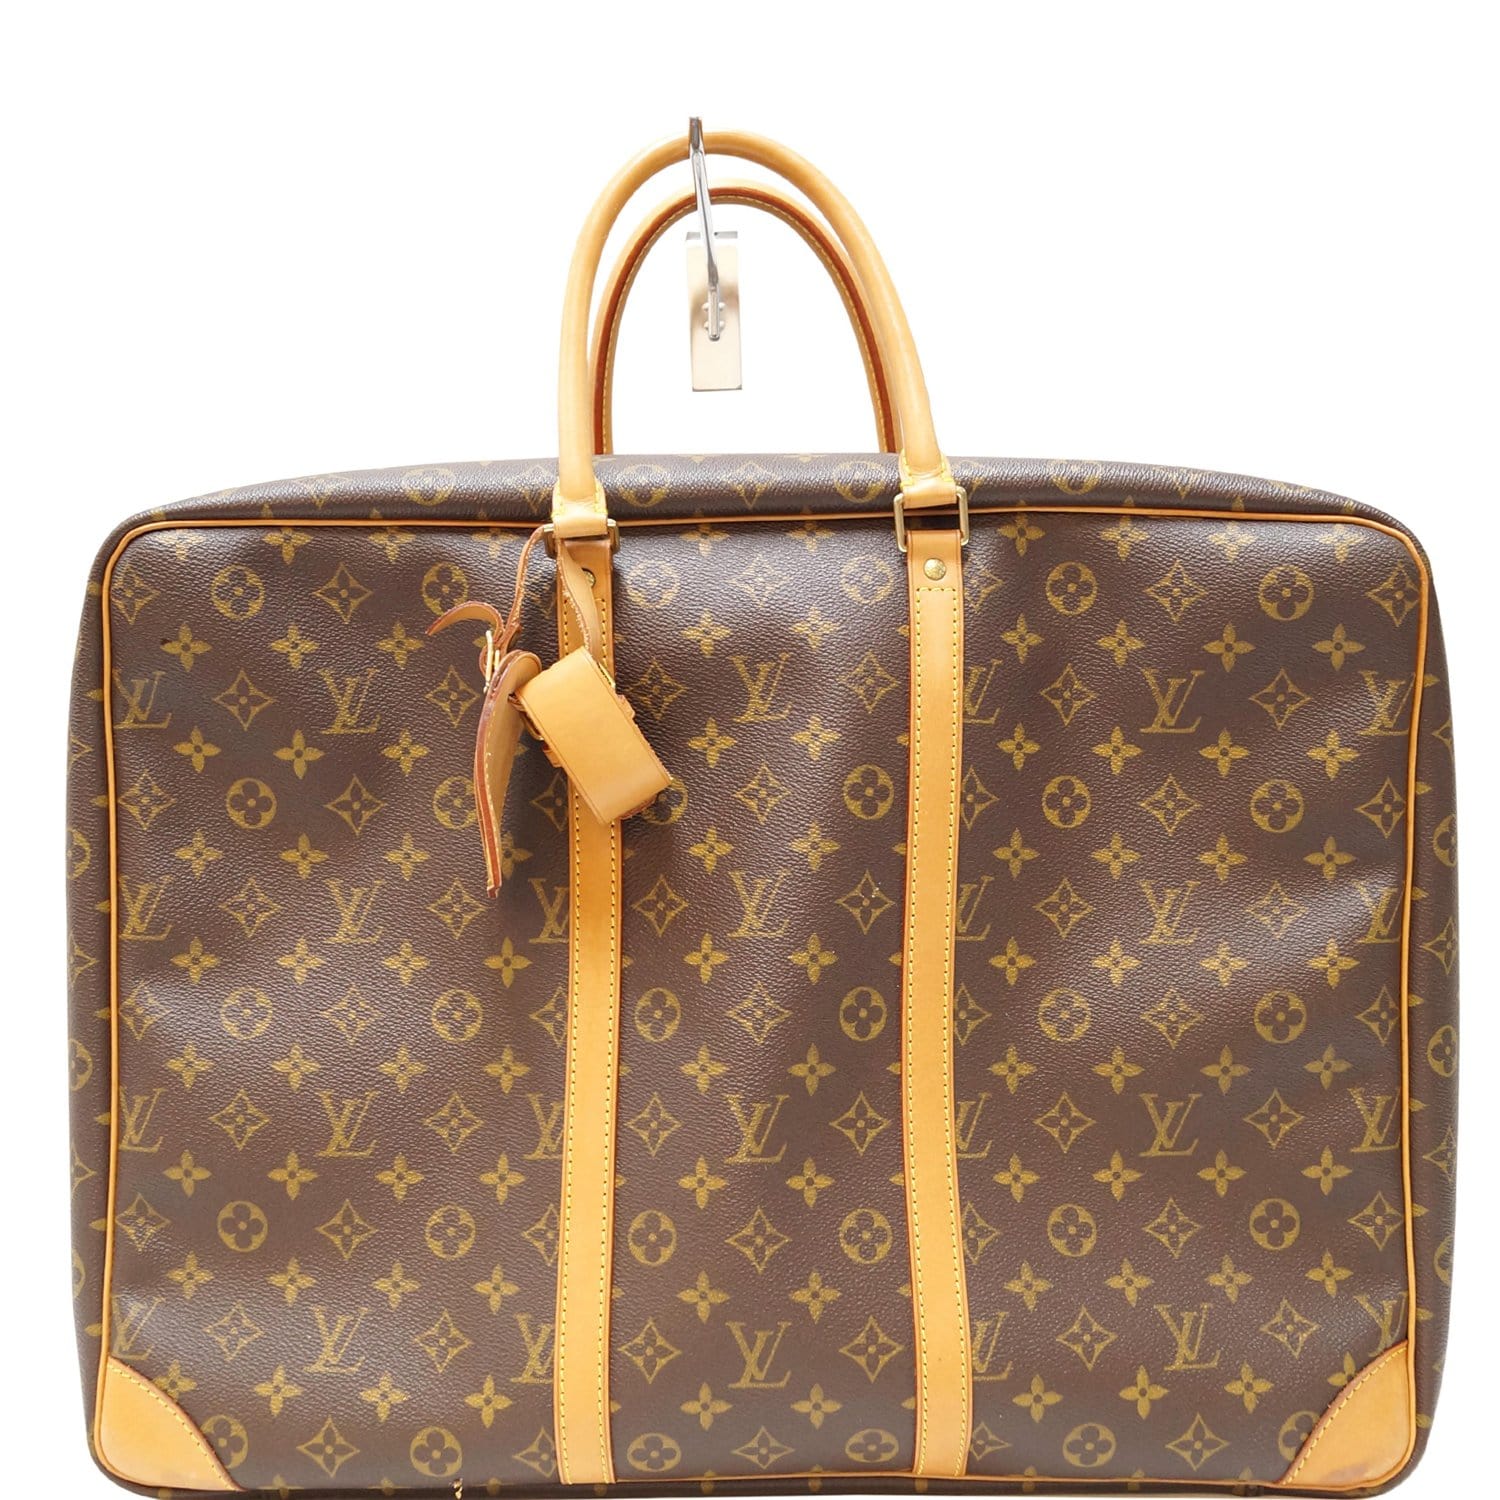 Authentic Louis Vuitton Monogram Canvas Sirius 45 Luggage Carry On